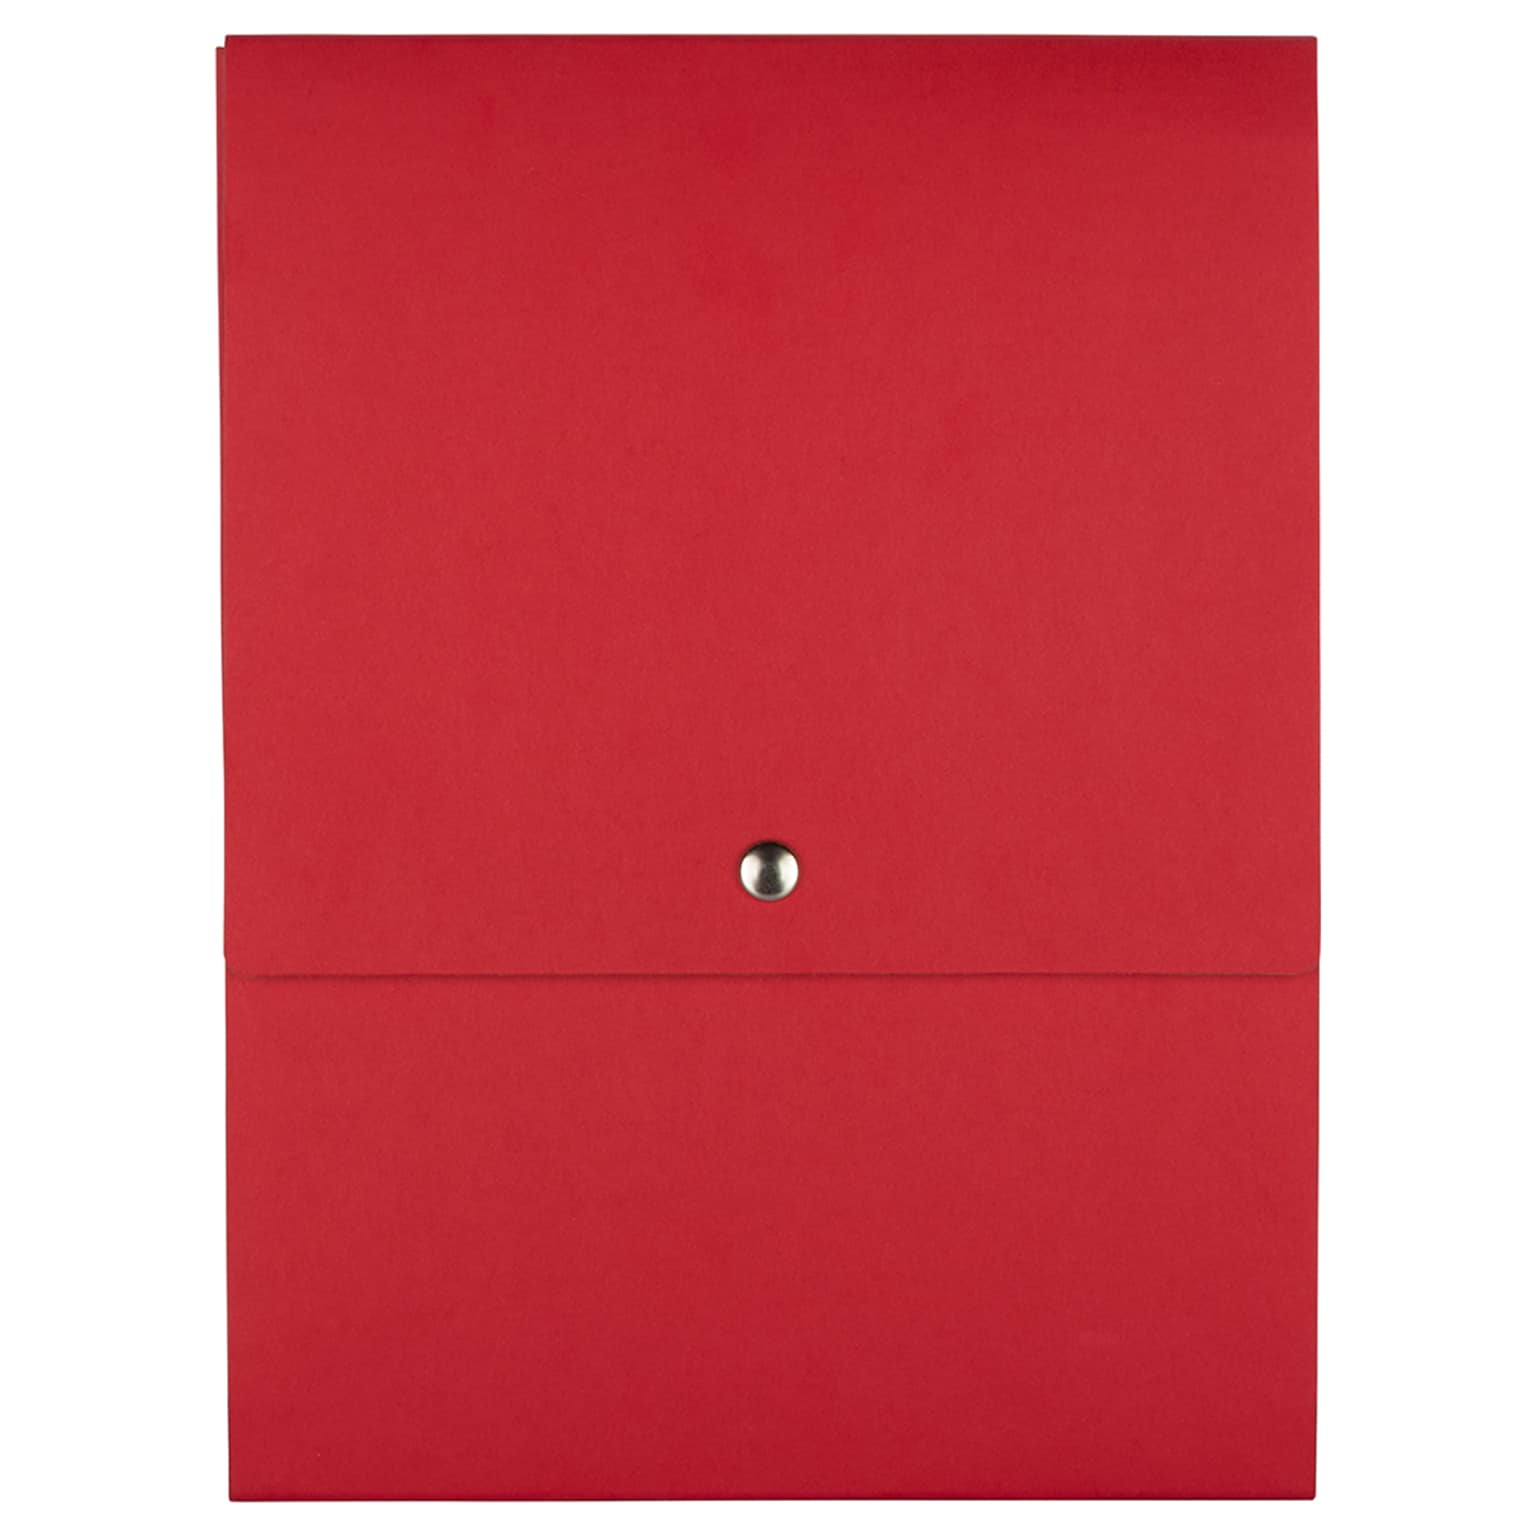 JAM PAPER Vertical Snap Closure Portfolio, 12 1/8 x 9 x 1/2, Red Kraft (90335343)